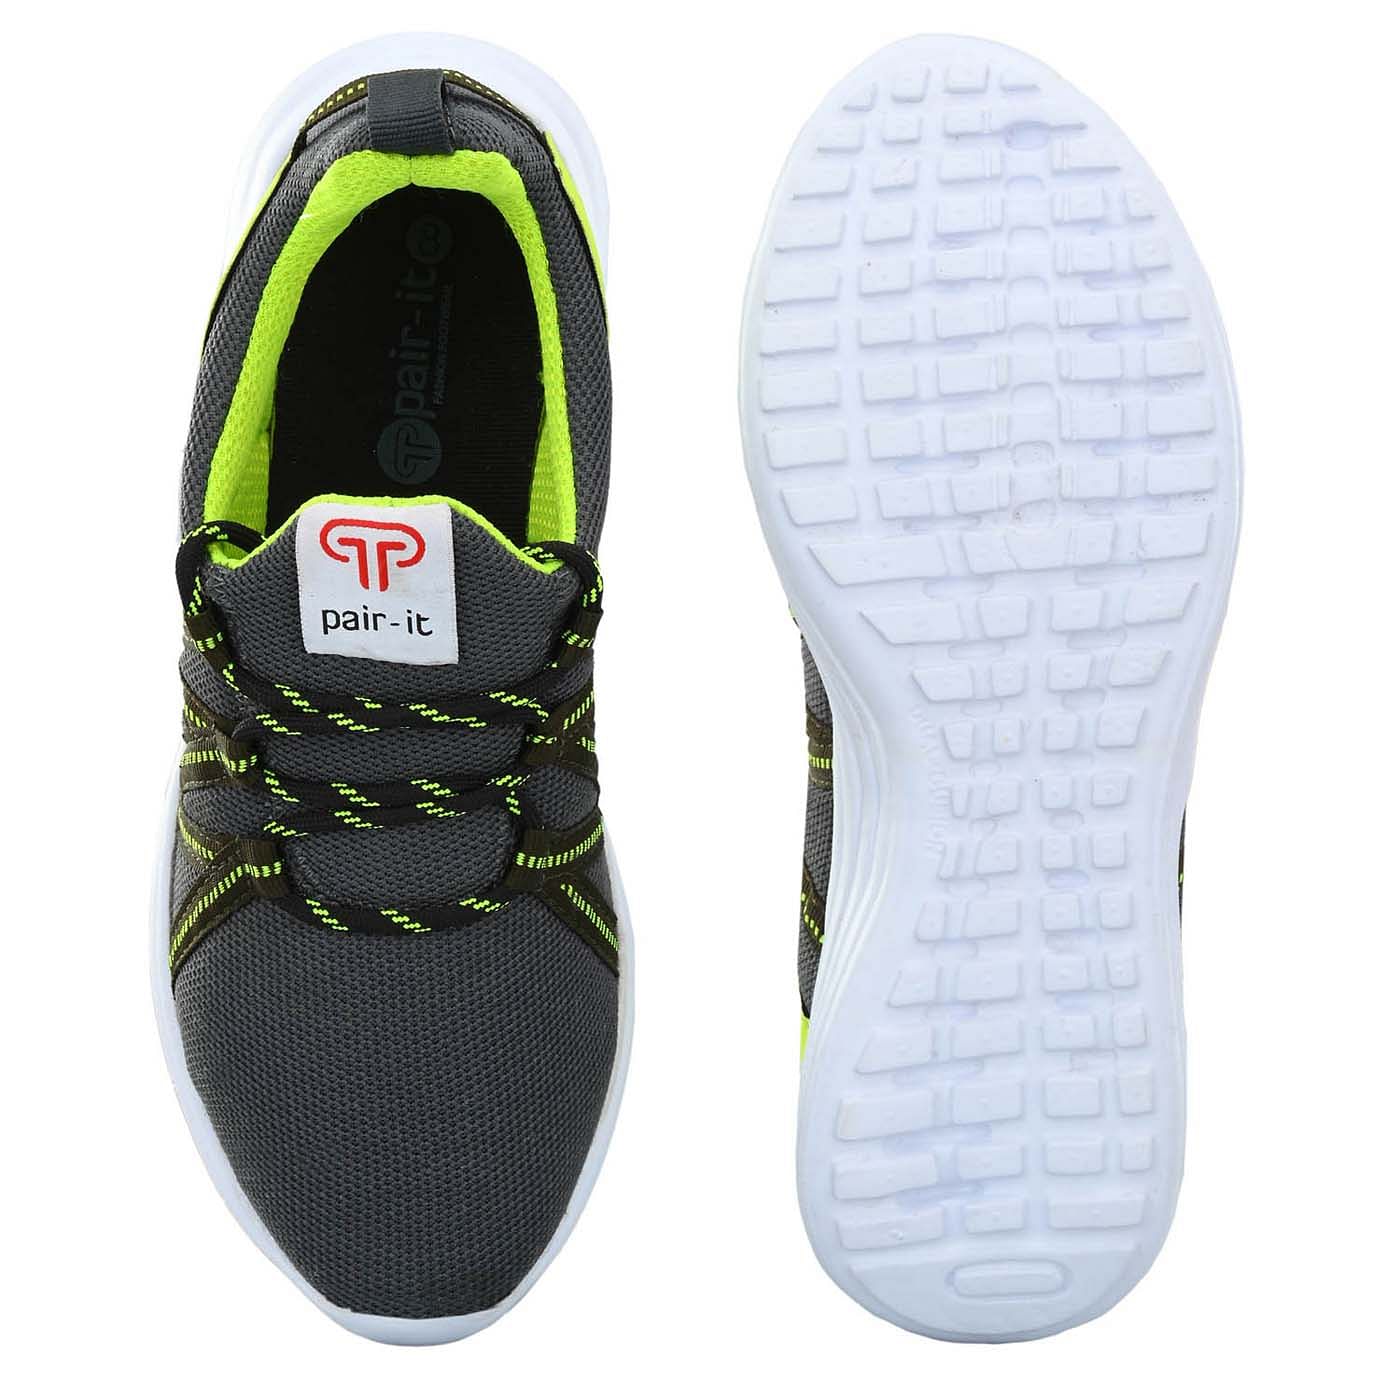 Pair-it Men's Sports Shoes -LZ-Presto 101-Grey